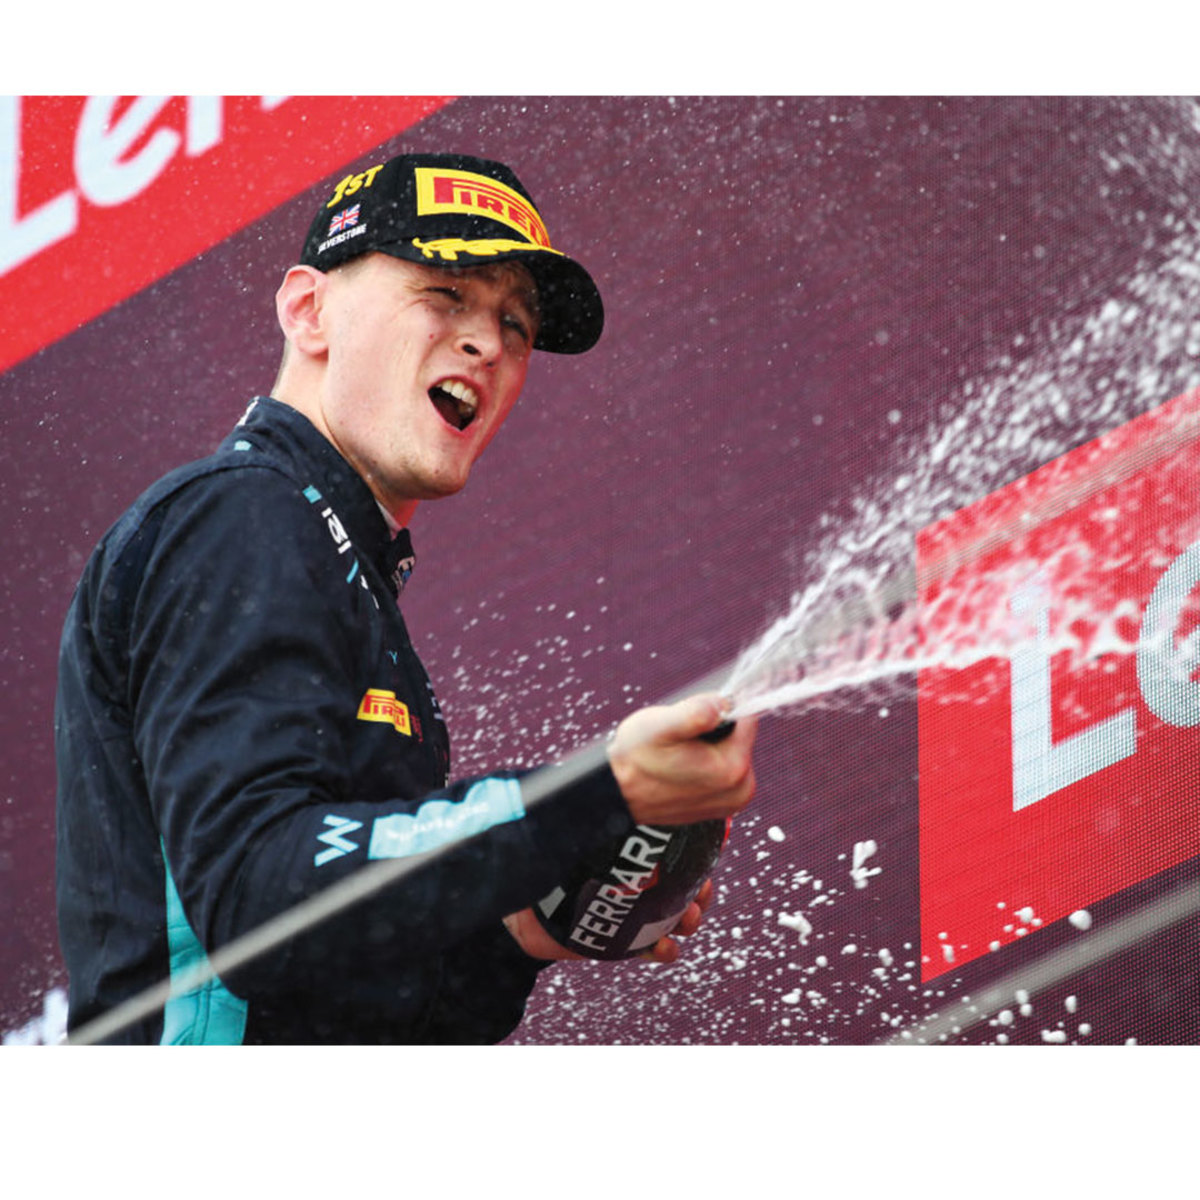 Race car driver spraying Champagne